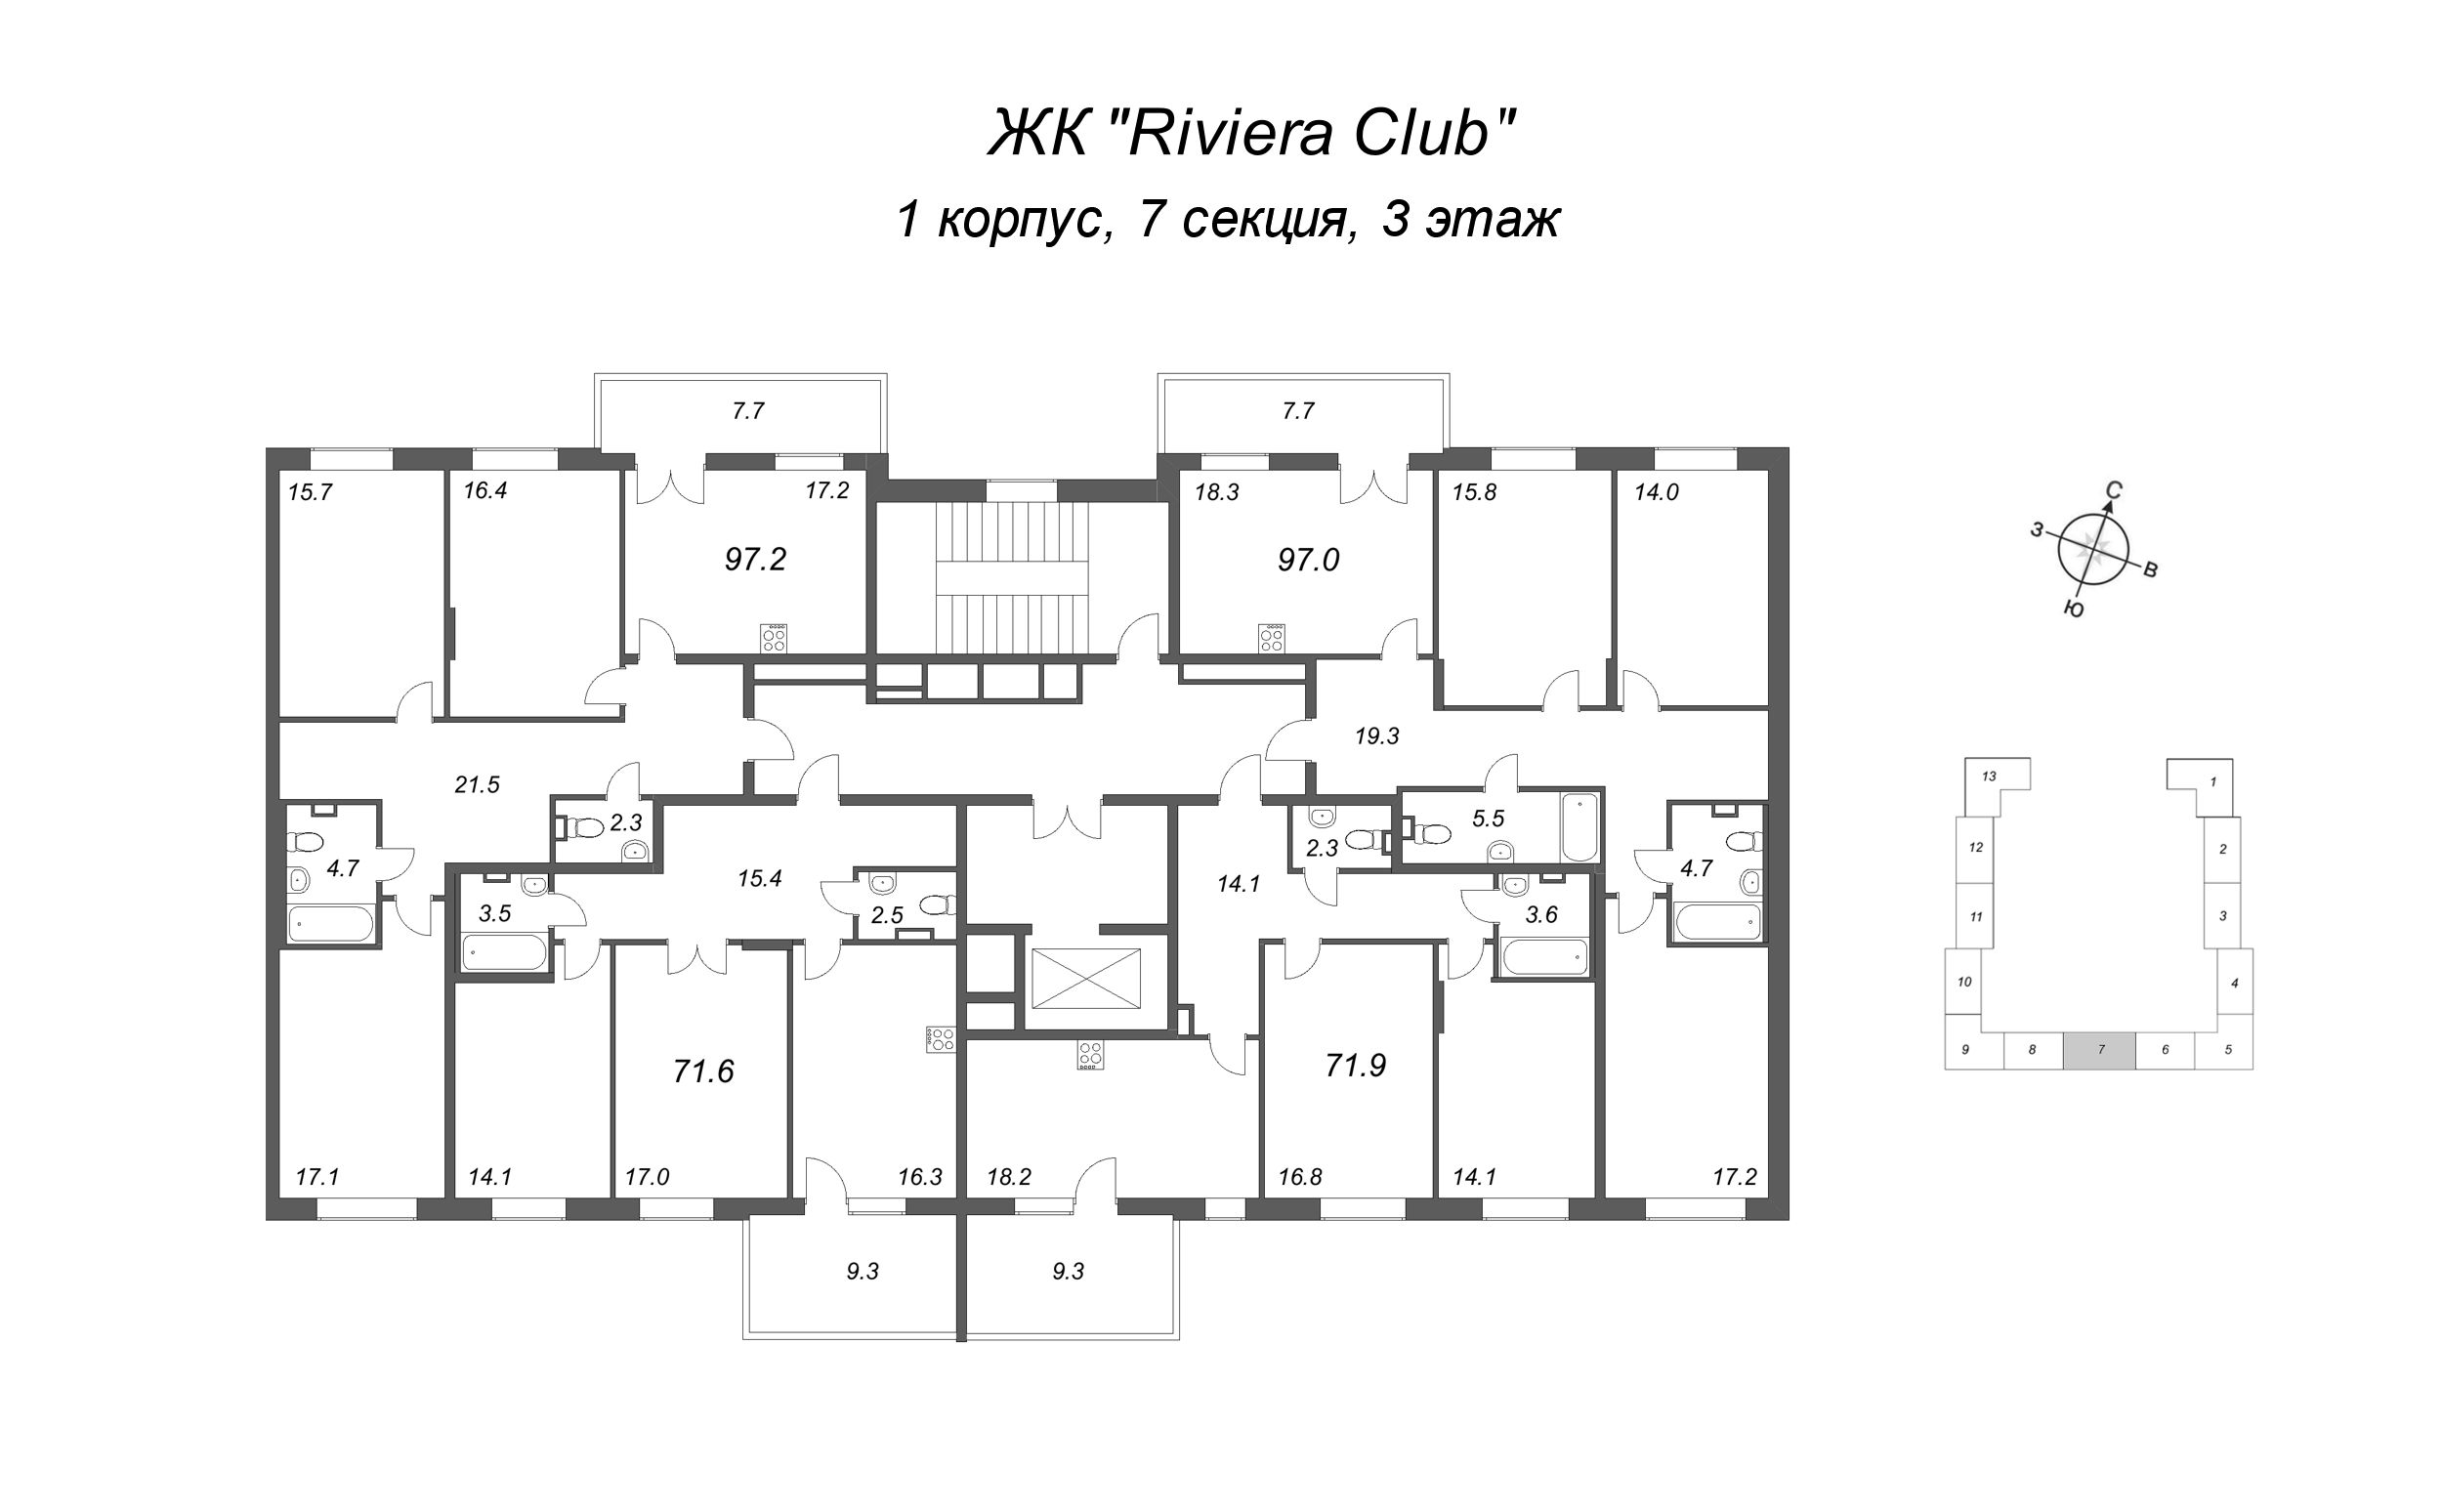 4-комнатная (Евро) квартира, 97.2 м² - планировка этажа